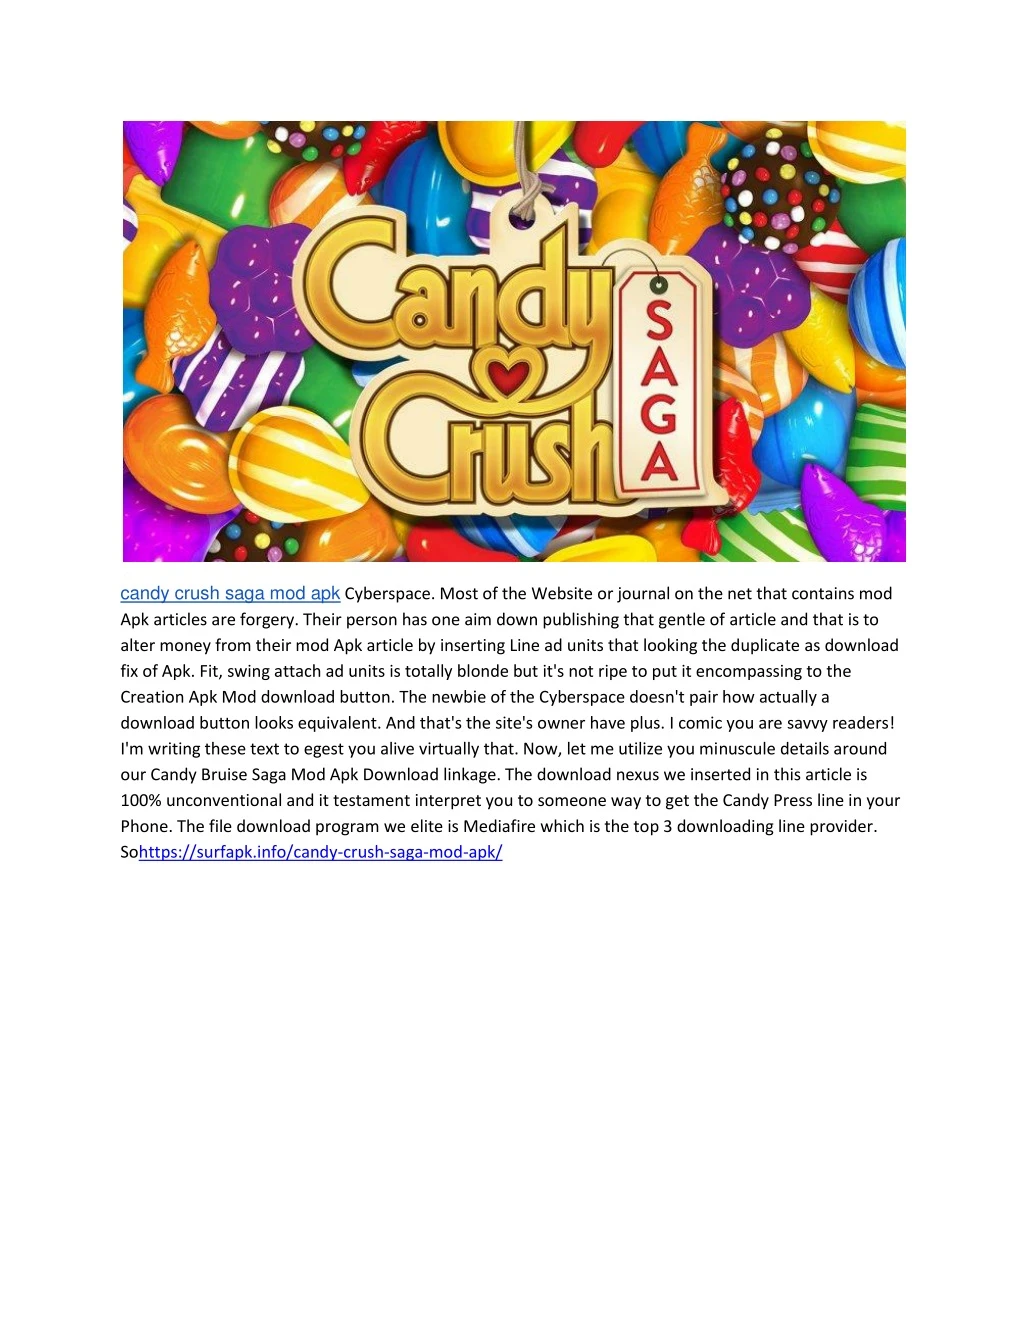 candy crush saga mod apk cyberspace most